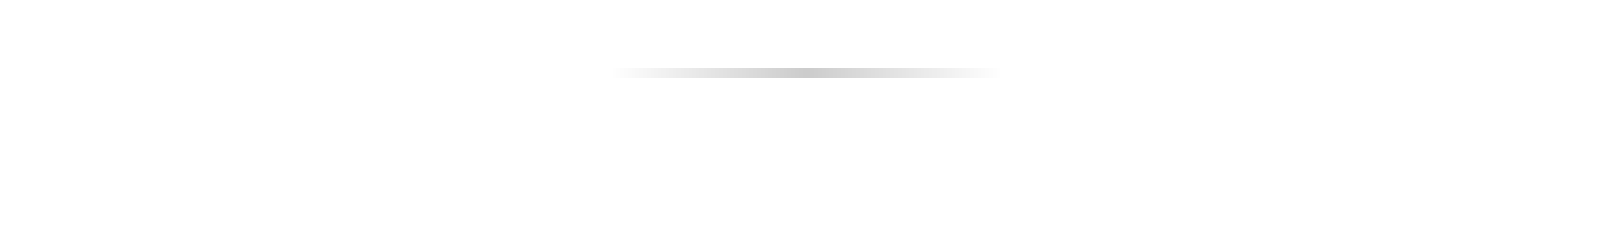 Customer Service　高橋洋服店のサービス